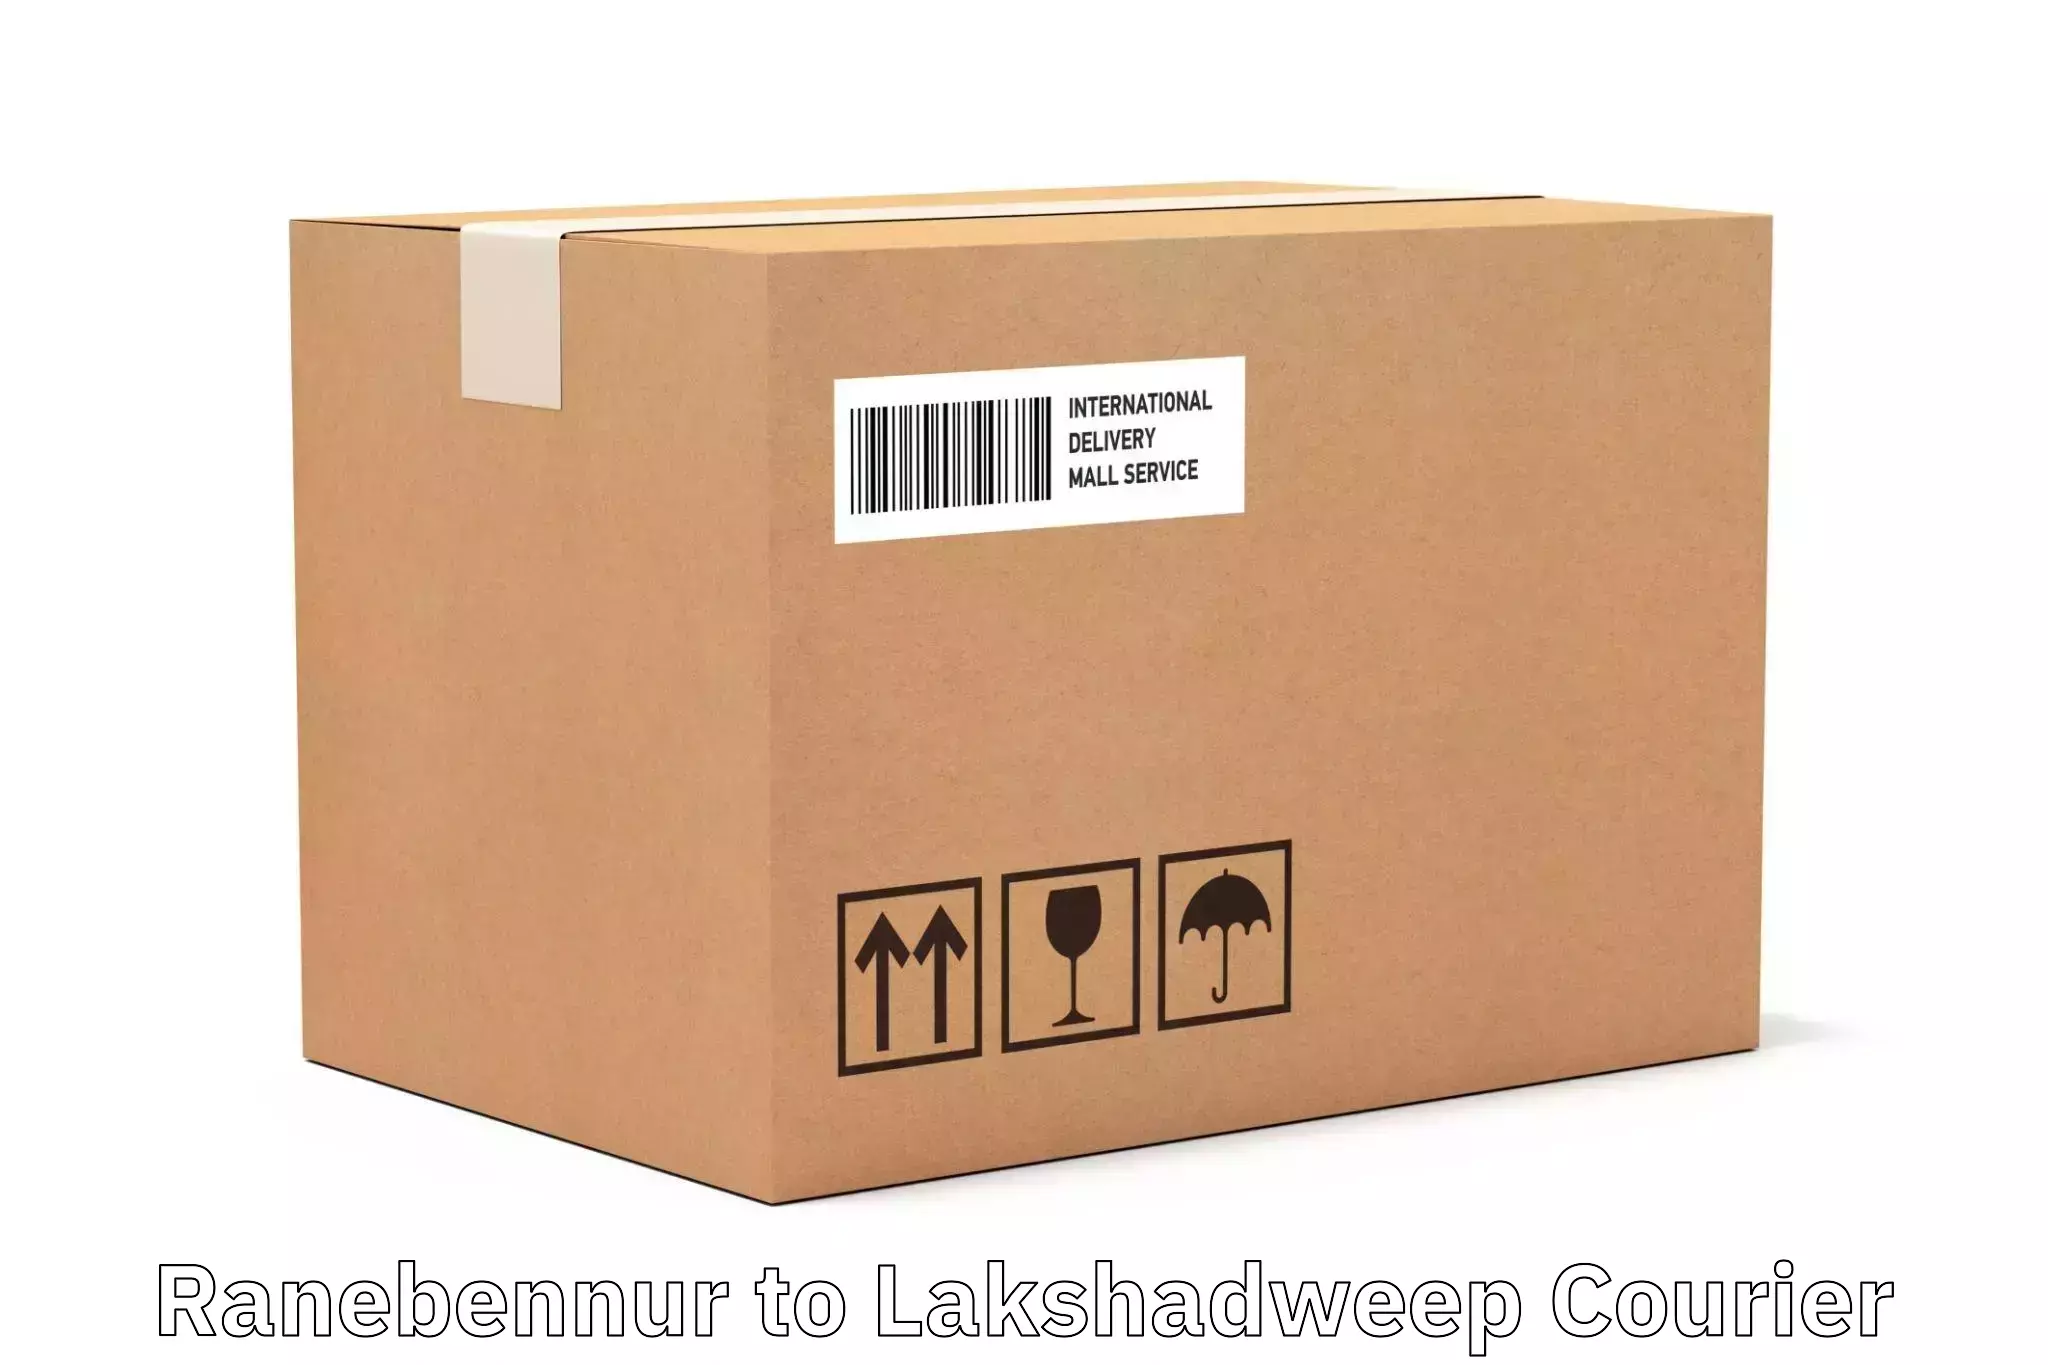 Flexible shipping options Ranebennur to Lakshadweep